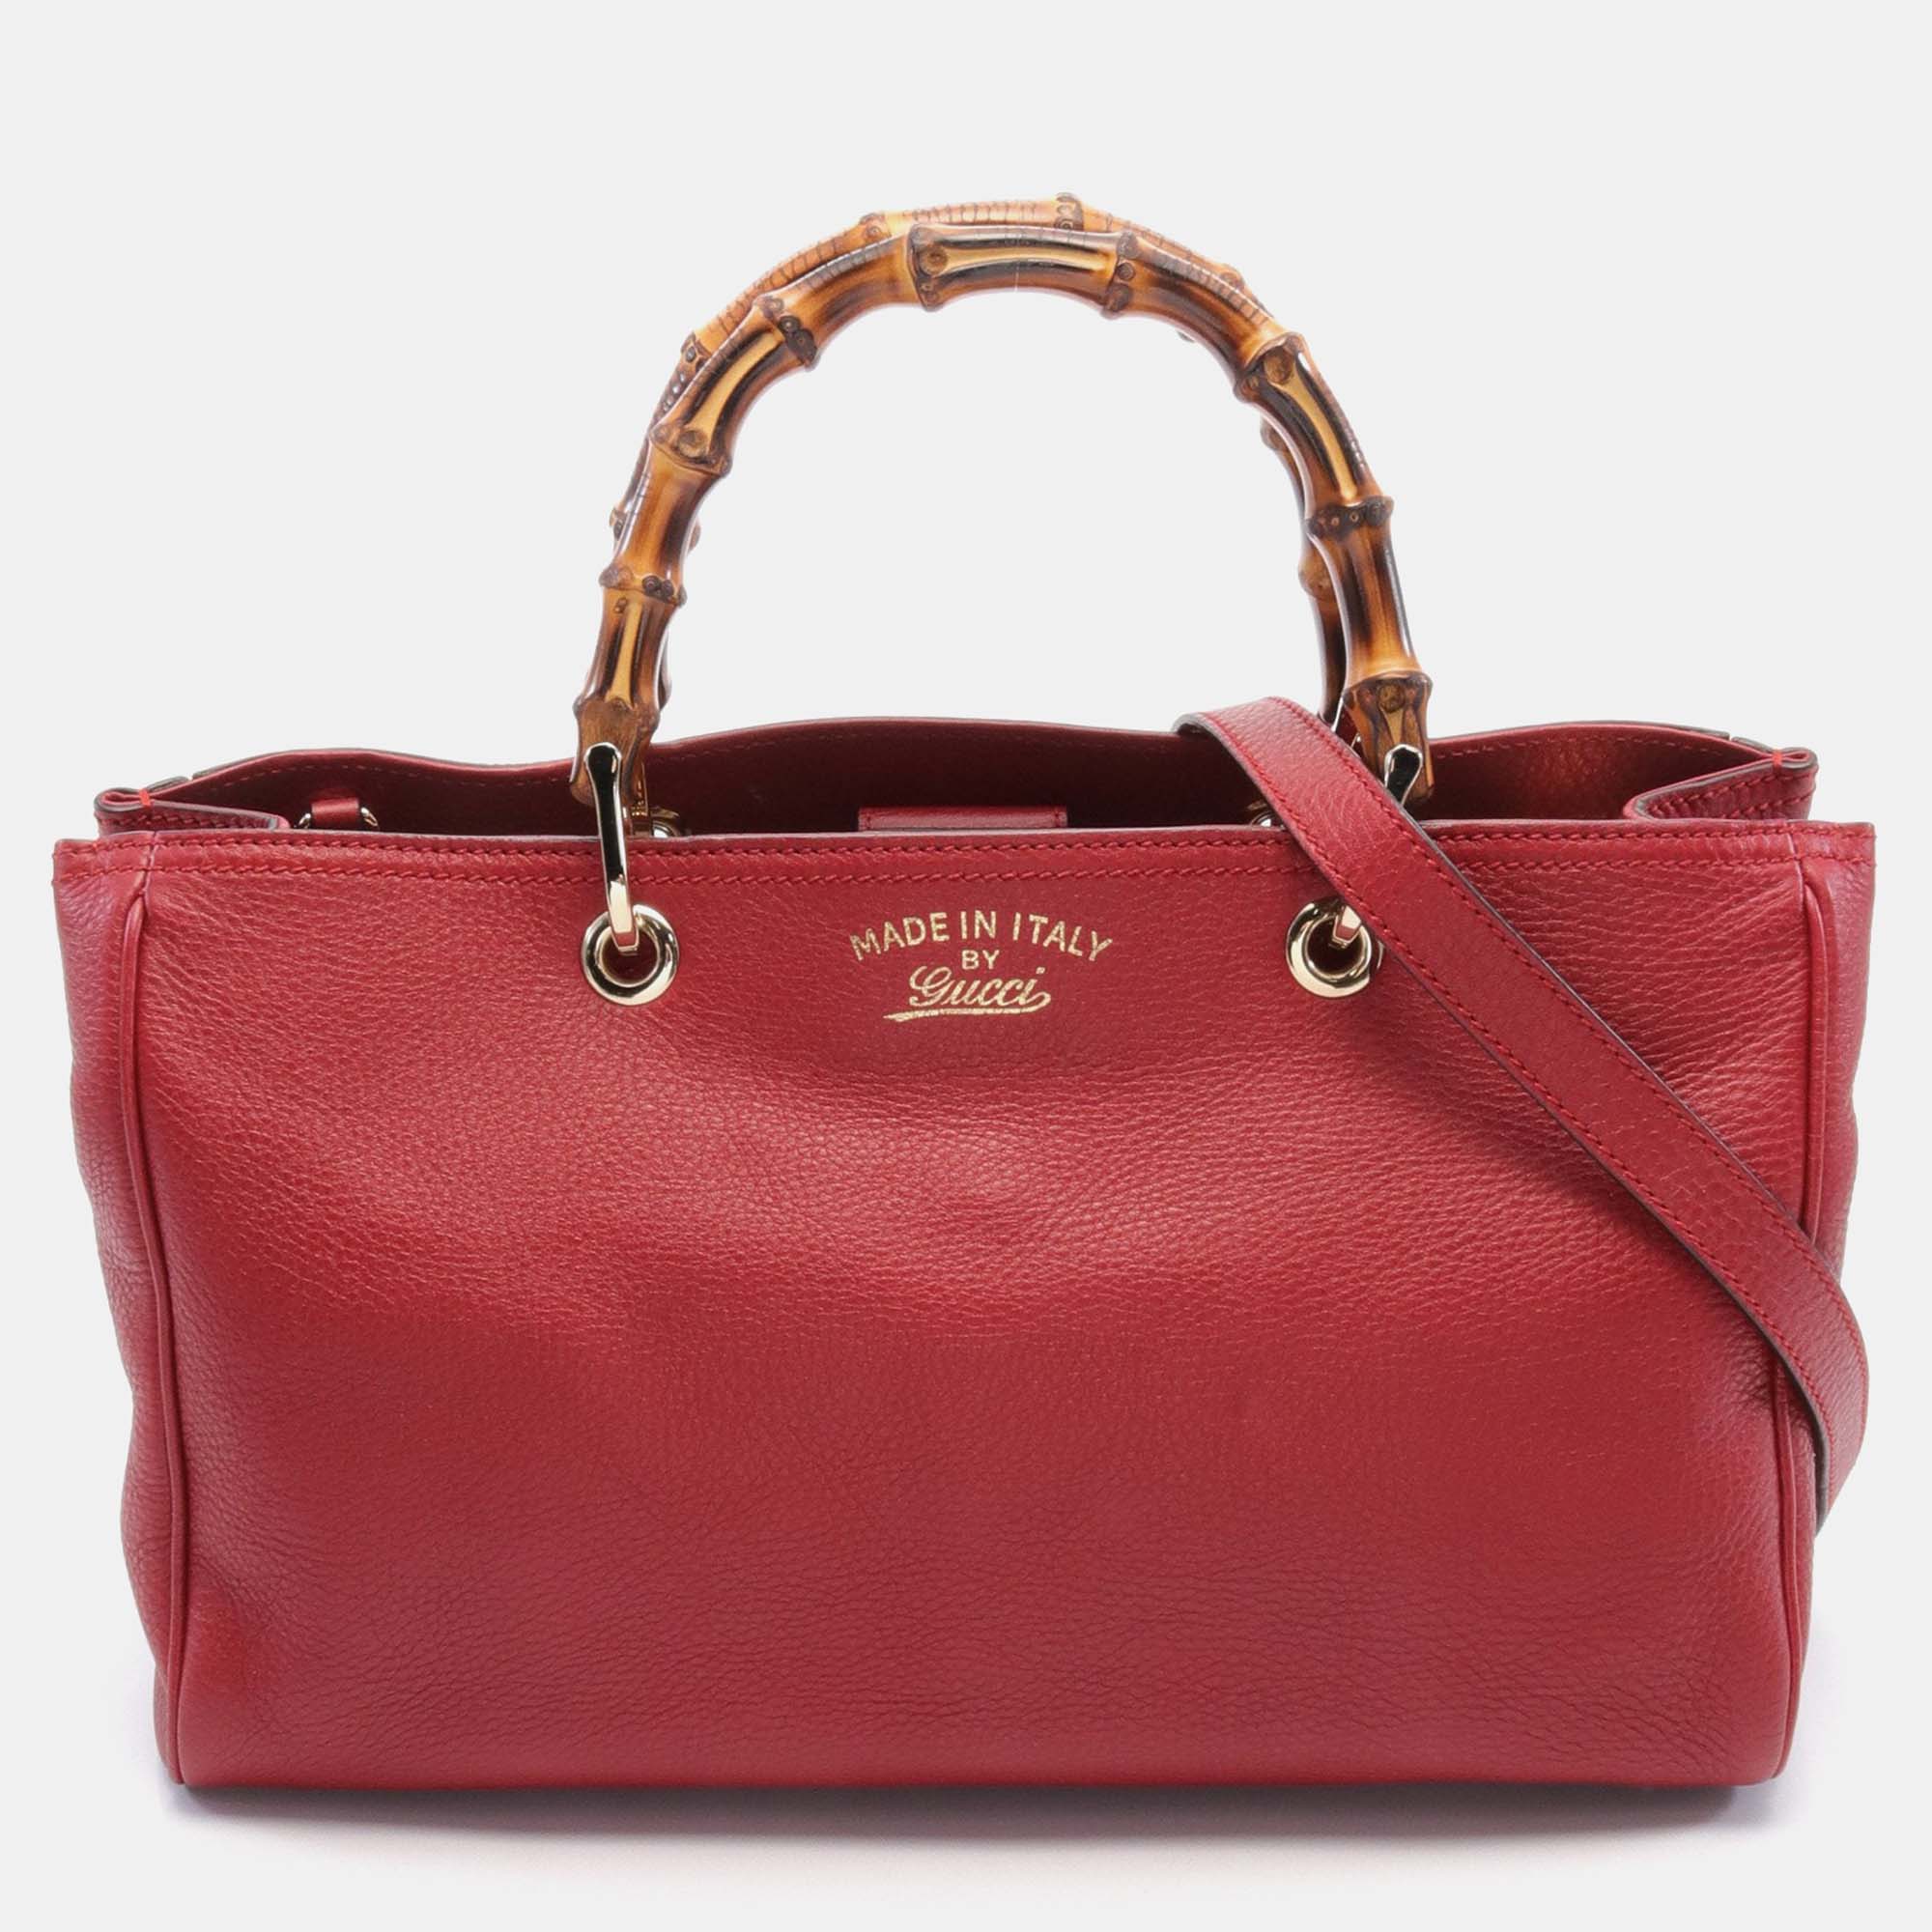 

Gucci Bamboo Shopper Medium Handbag Tote bag Leather Red 2WAY